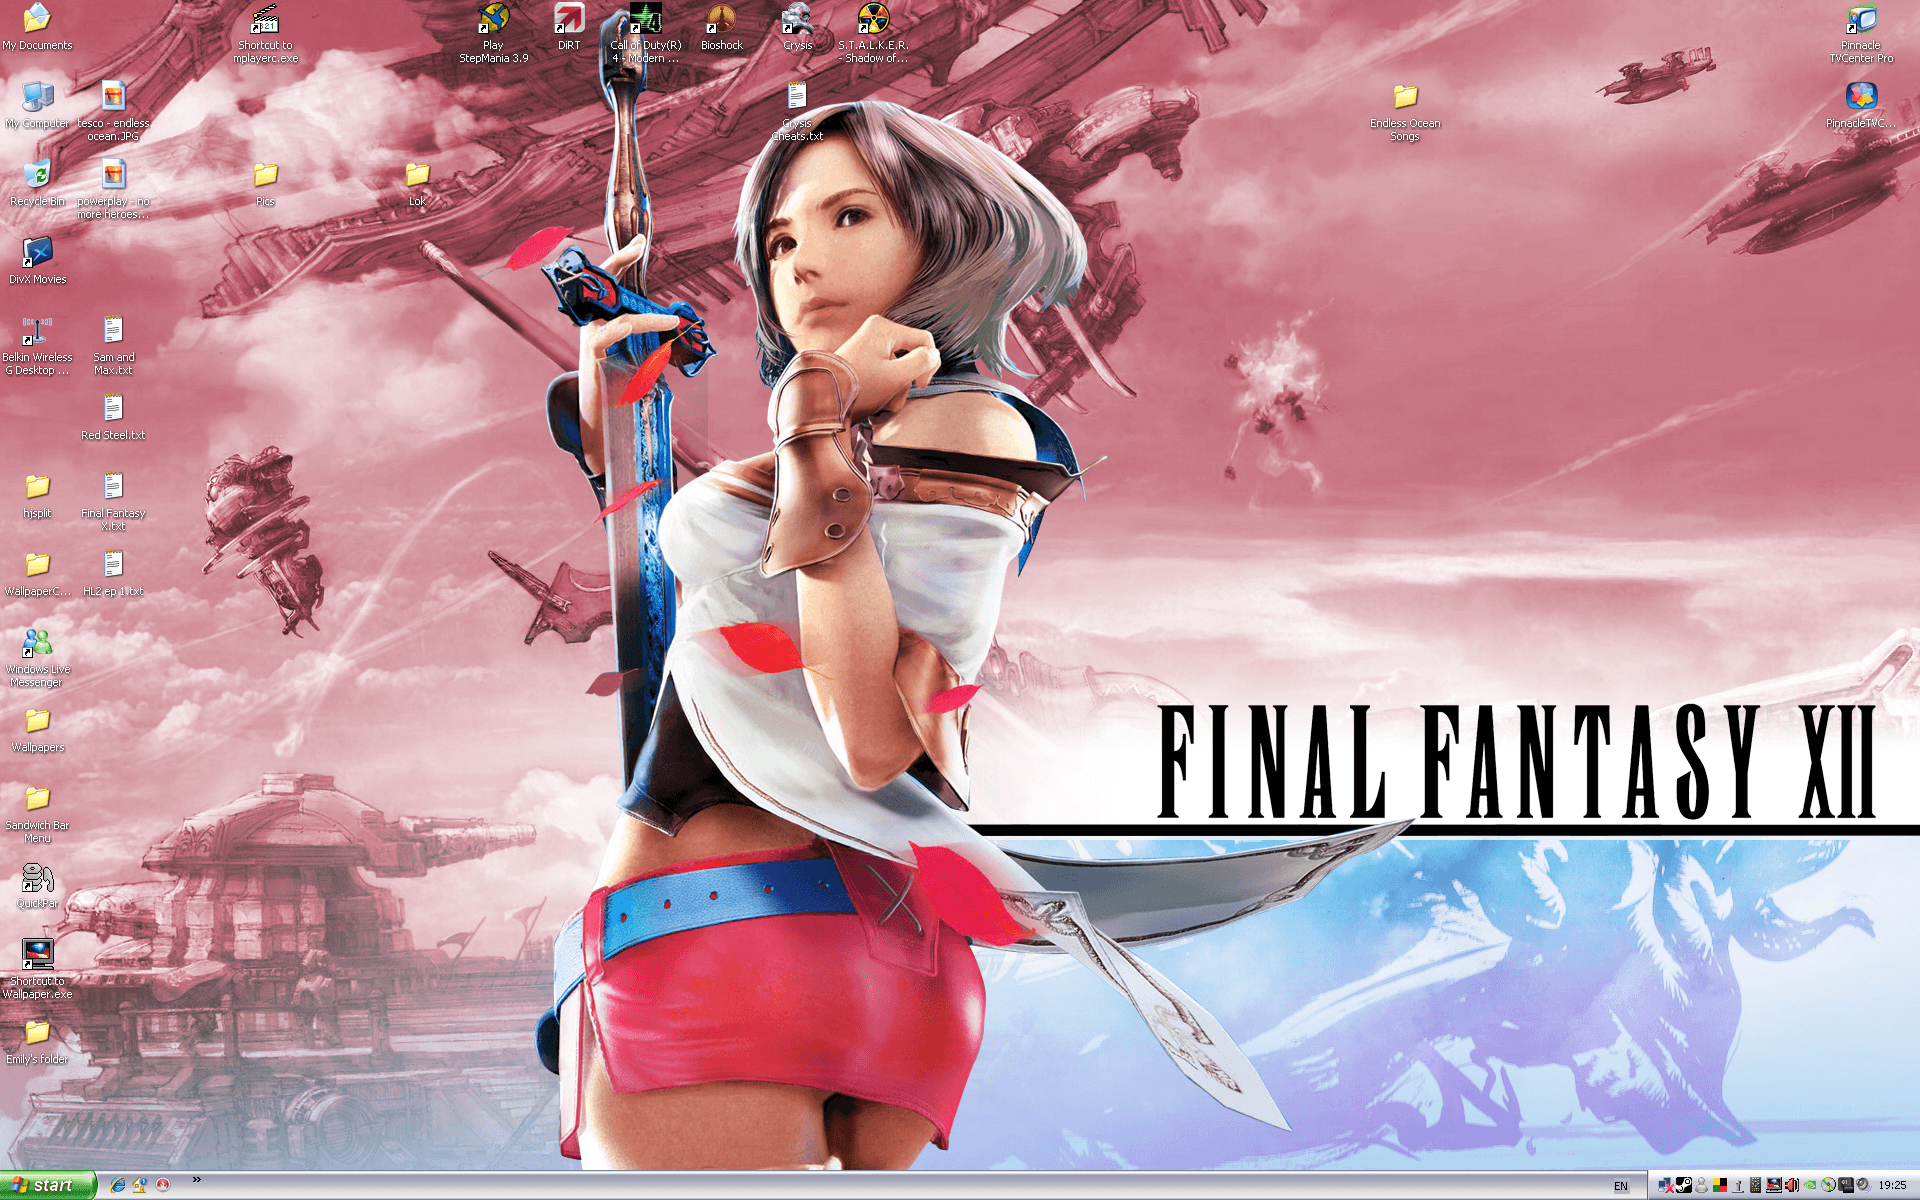 Final Fantasy Xii HD wallpaper